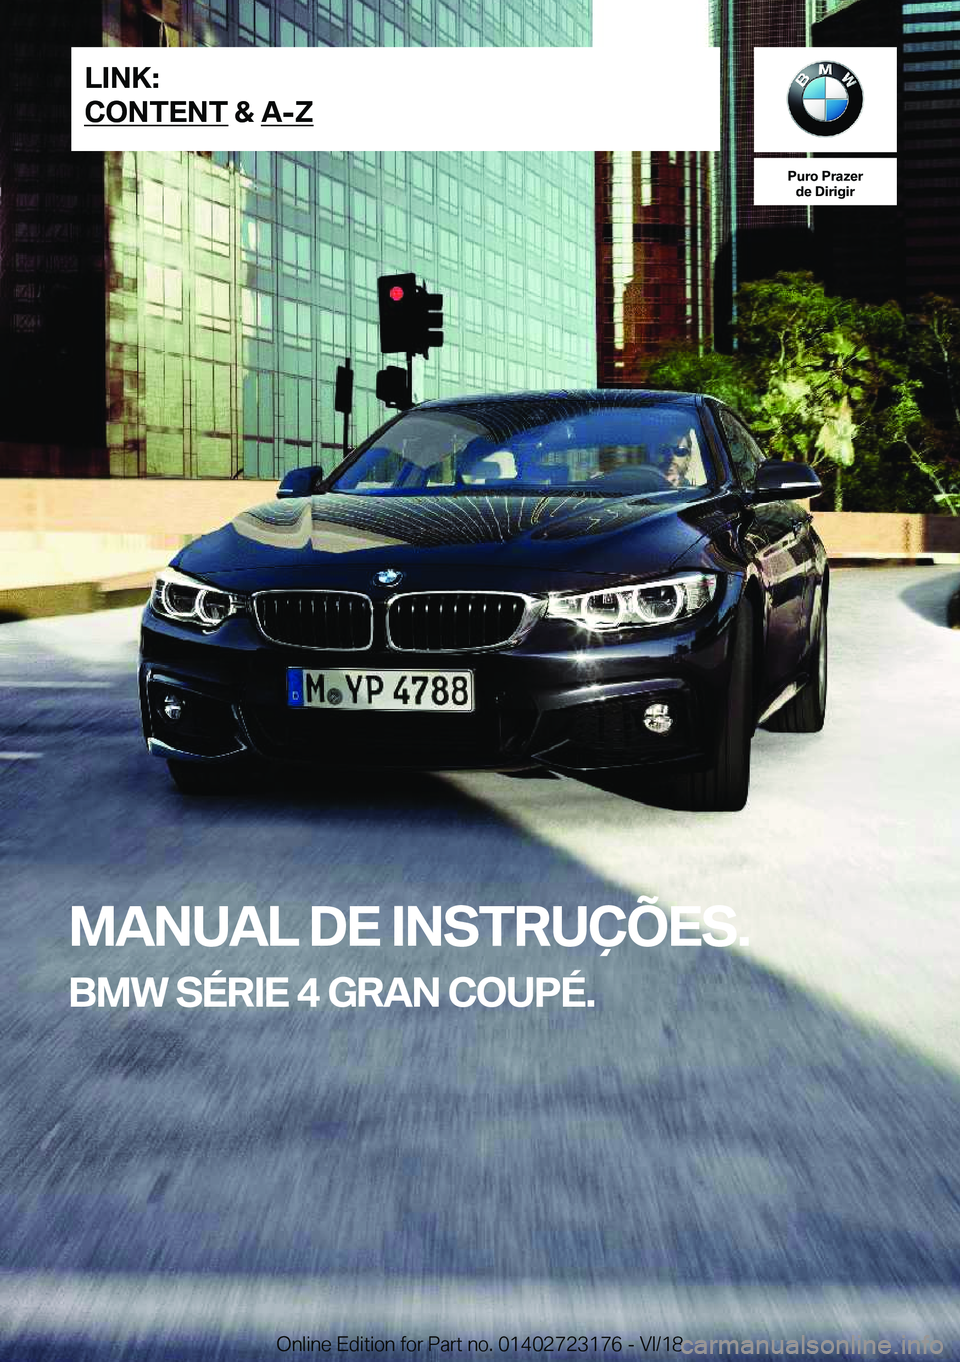 BMW 4 SERIES COUPE 2019  Manual do condutor (in Portuguese) �P�u�r�o��P�r�a�z�e�r�d�e��D�i�r�i�g�i�r
�M�A�N�U�A�L��D�E��I�N�S�T�R�U�